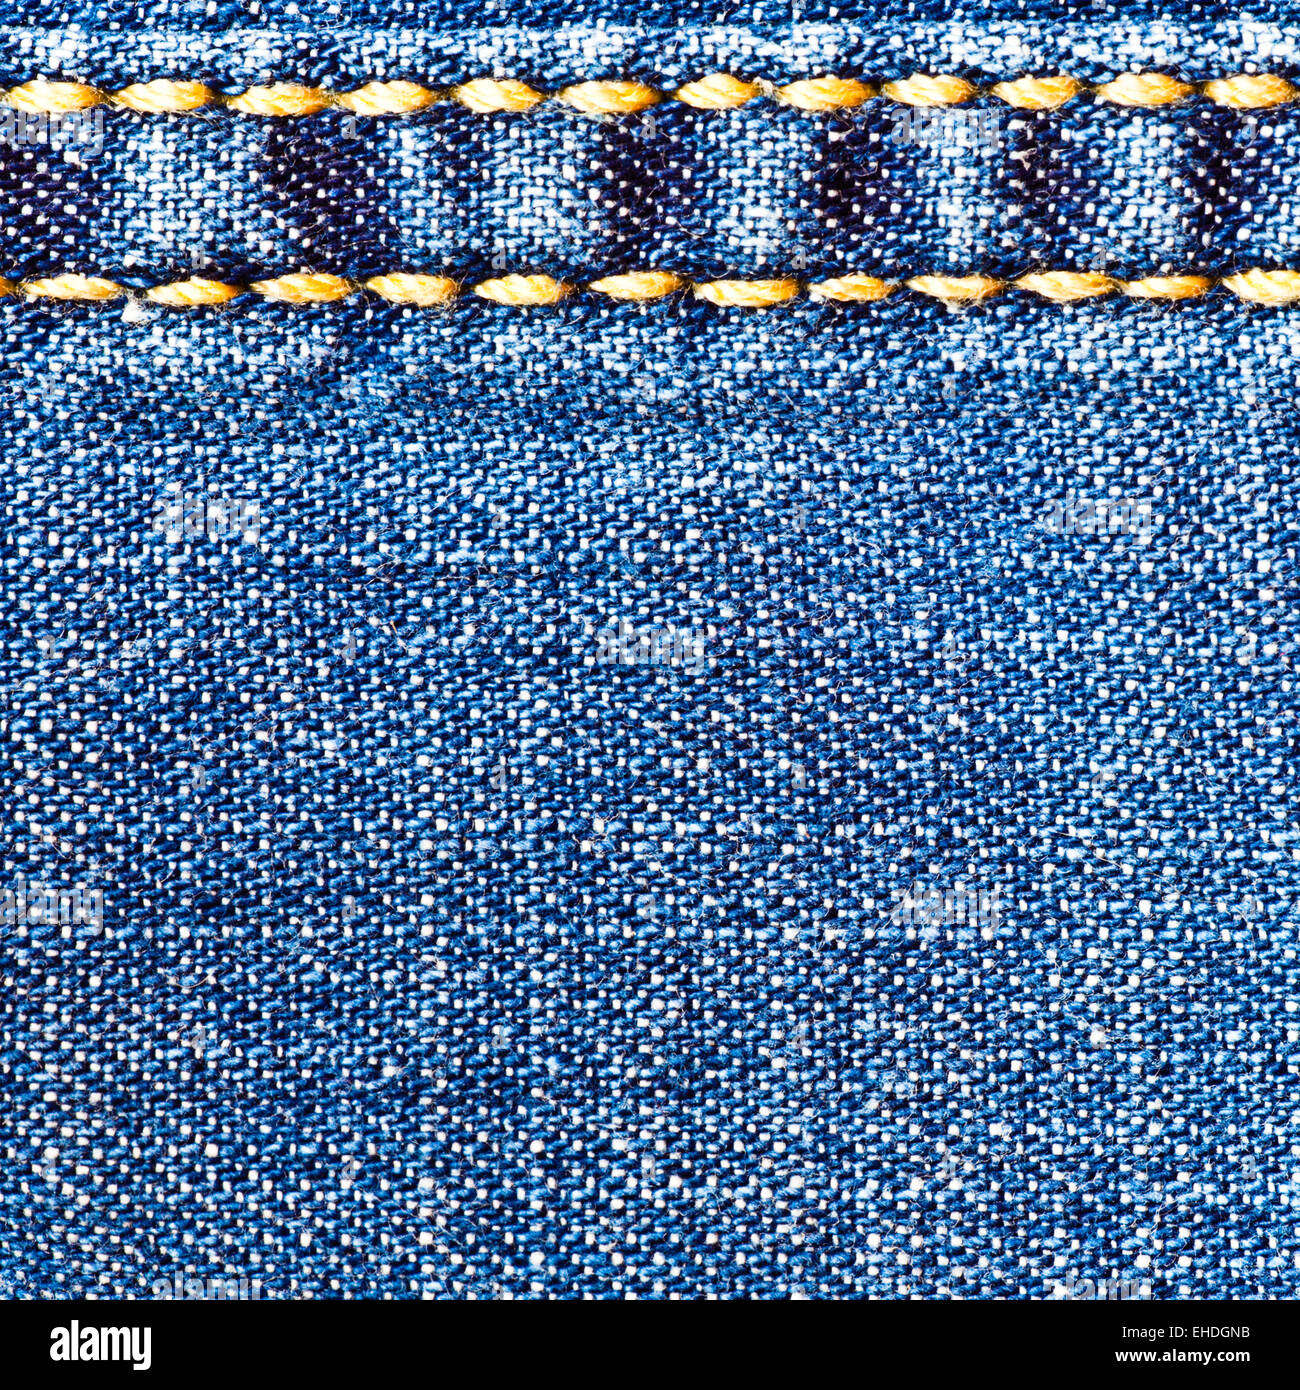 Blue jeans texture Stock Photo - Alamy